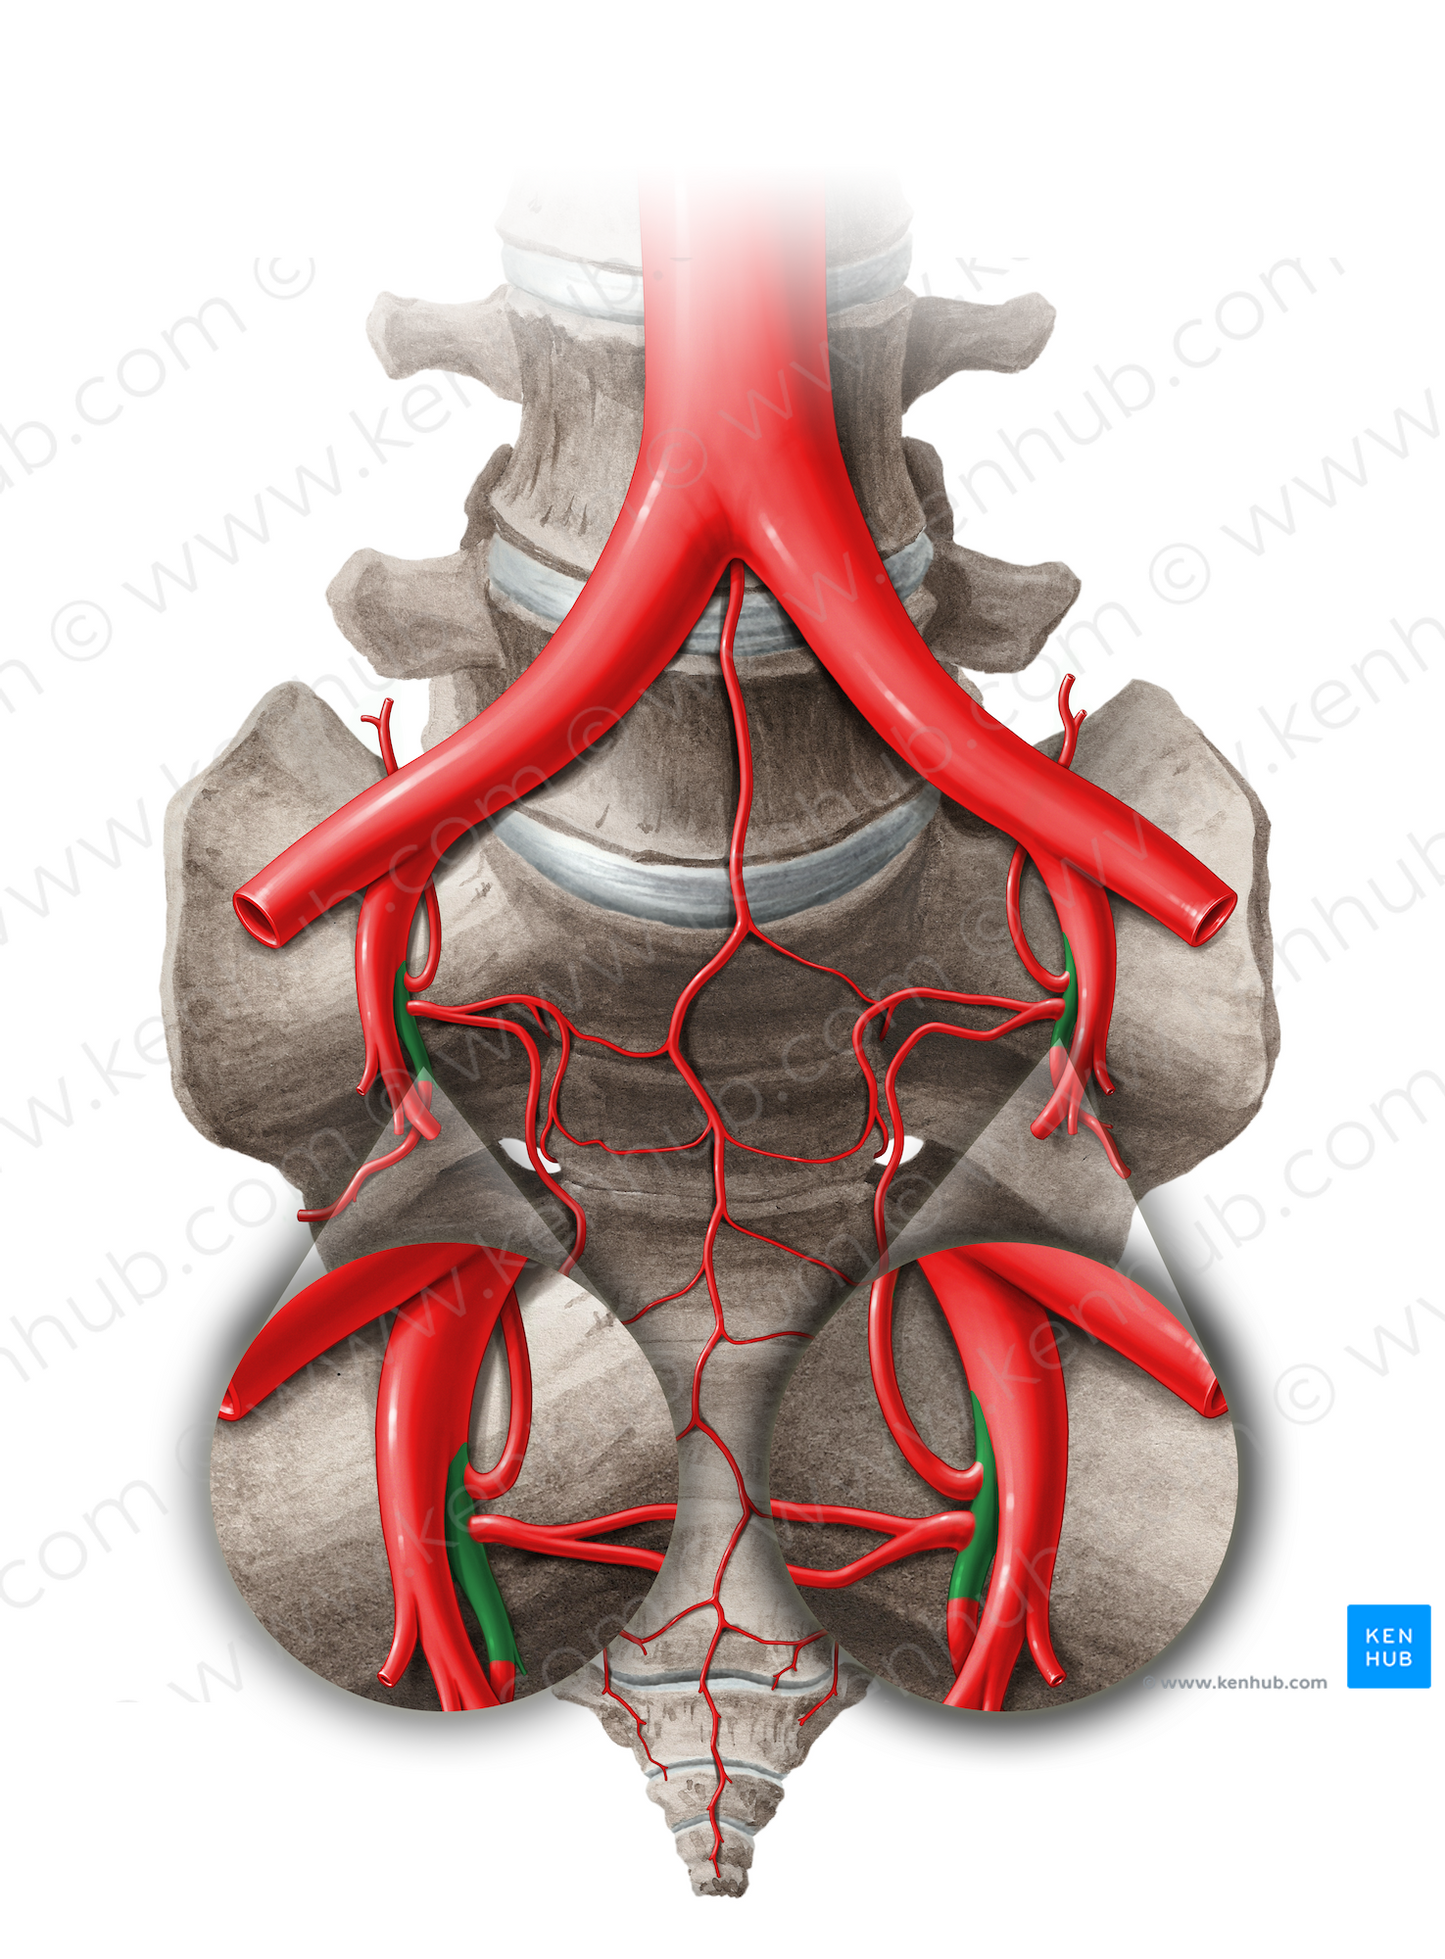 Posterior division of internal iliac artery (#14049)